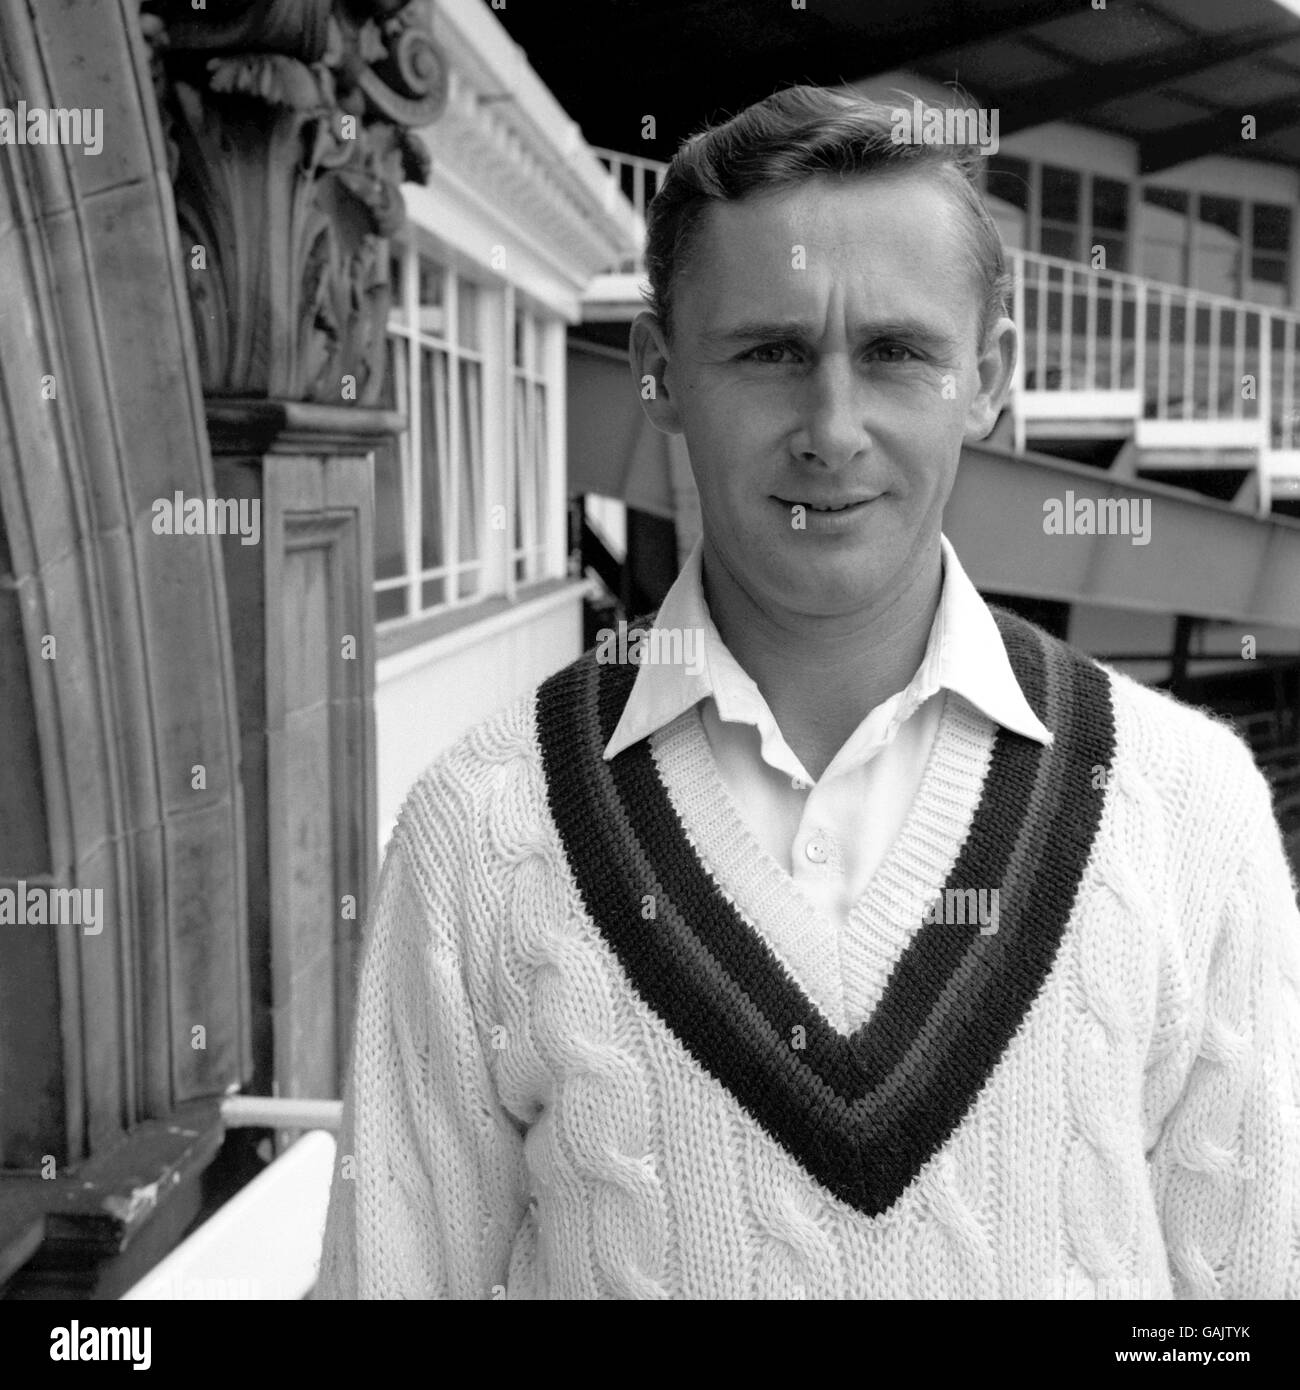 Cricket - Lancashire - H/S Foto Stock